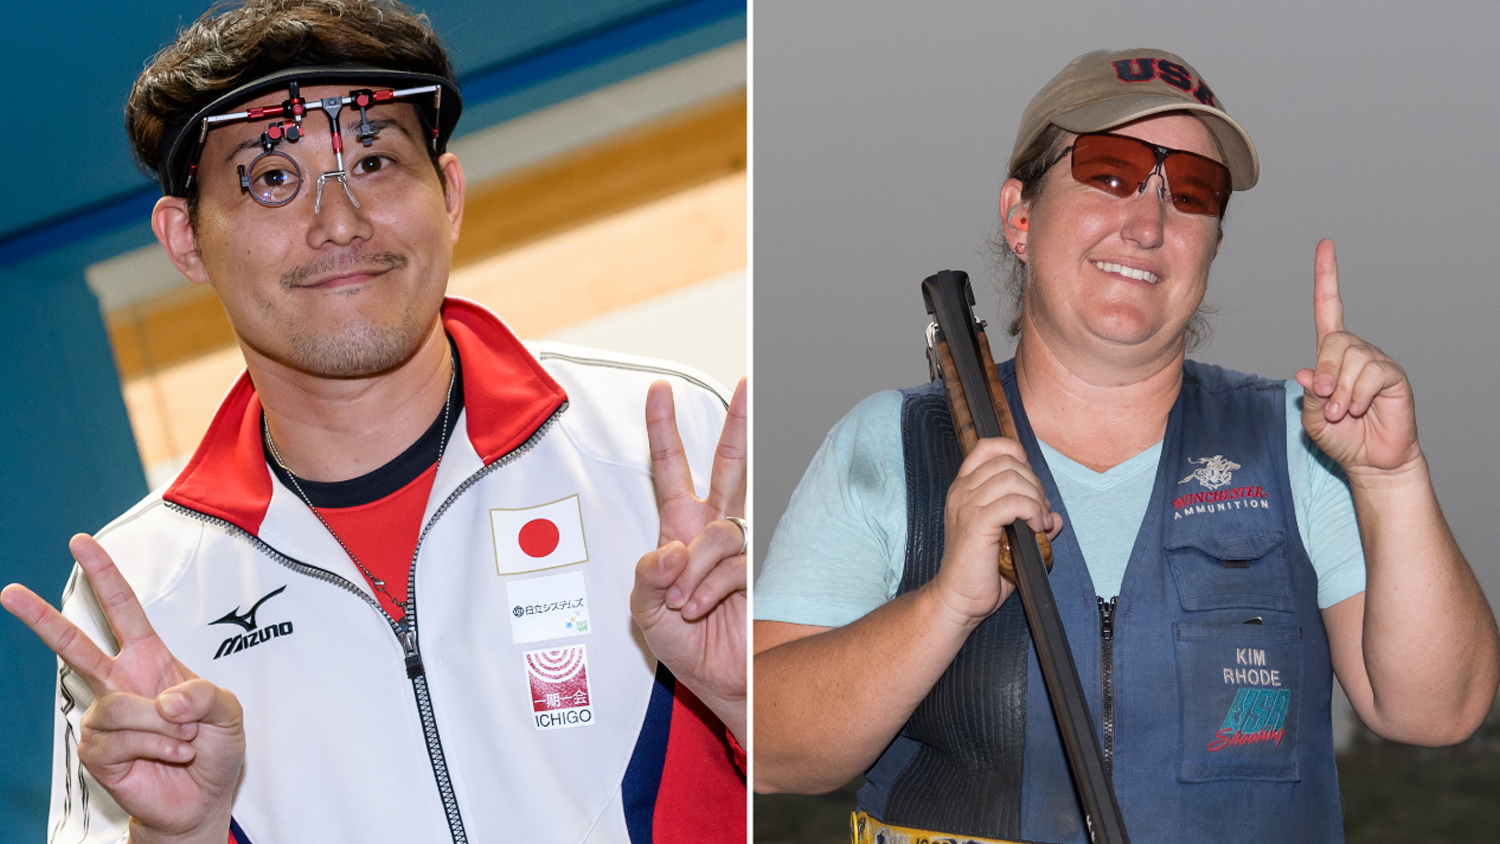 2017 ISSF Shooters of the Year: Matsuda Tomoyuki and Kim Rhode.